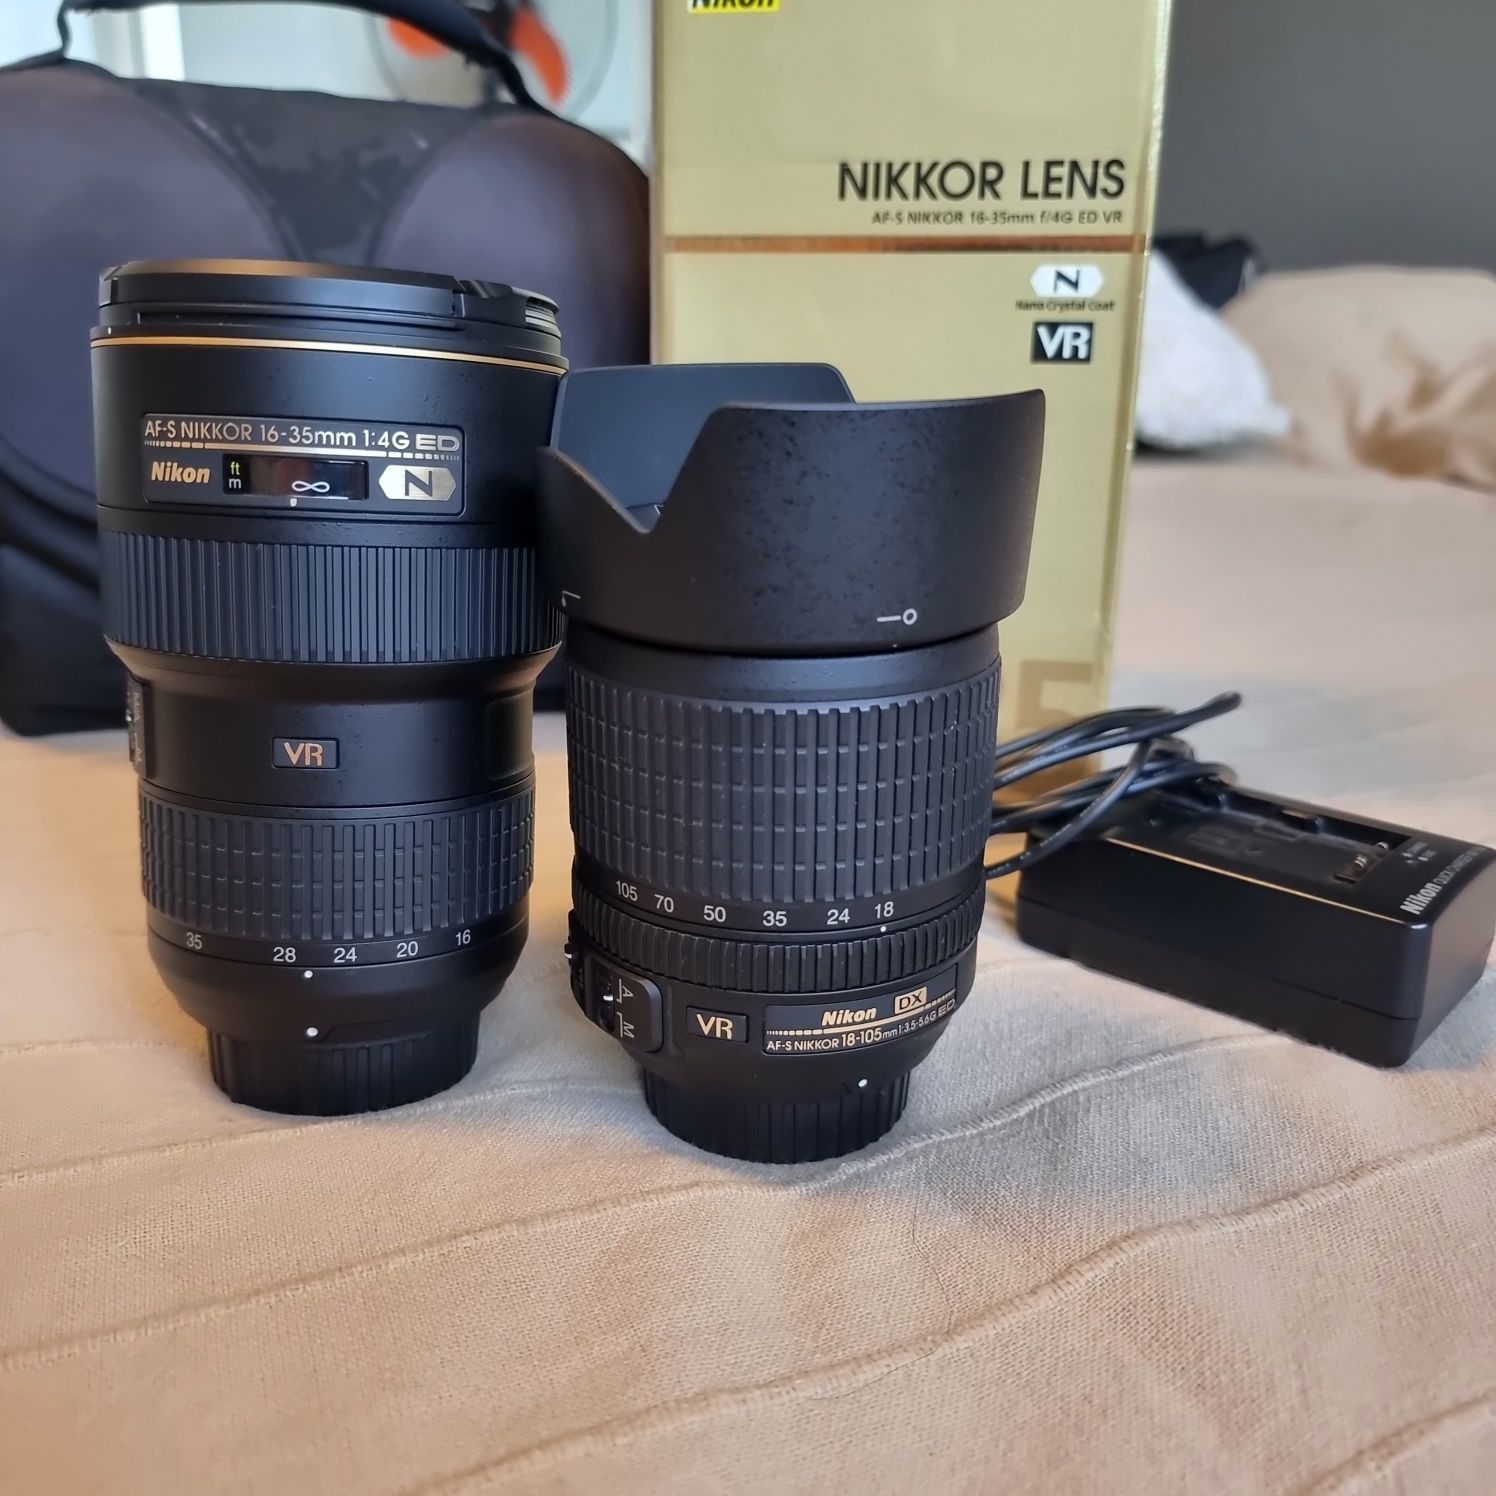 Nikon D90 kit/AFS 16-35